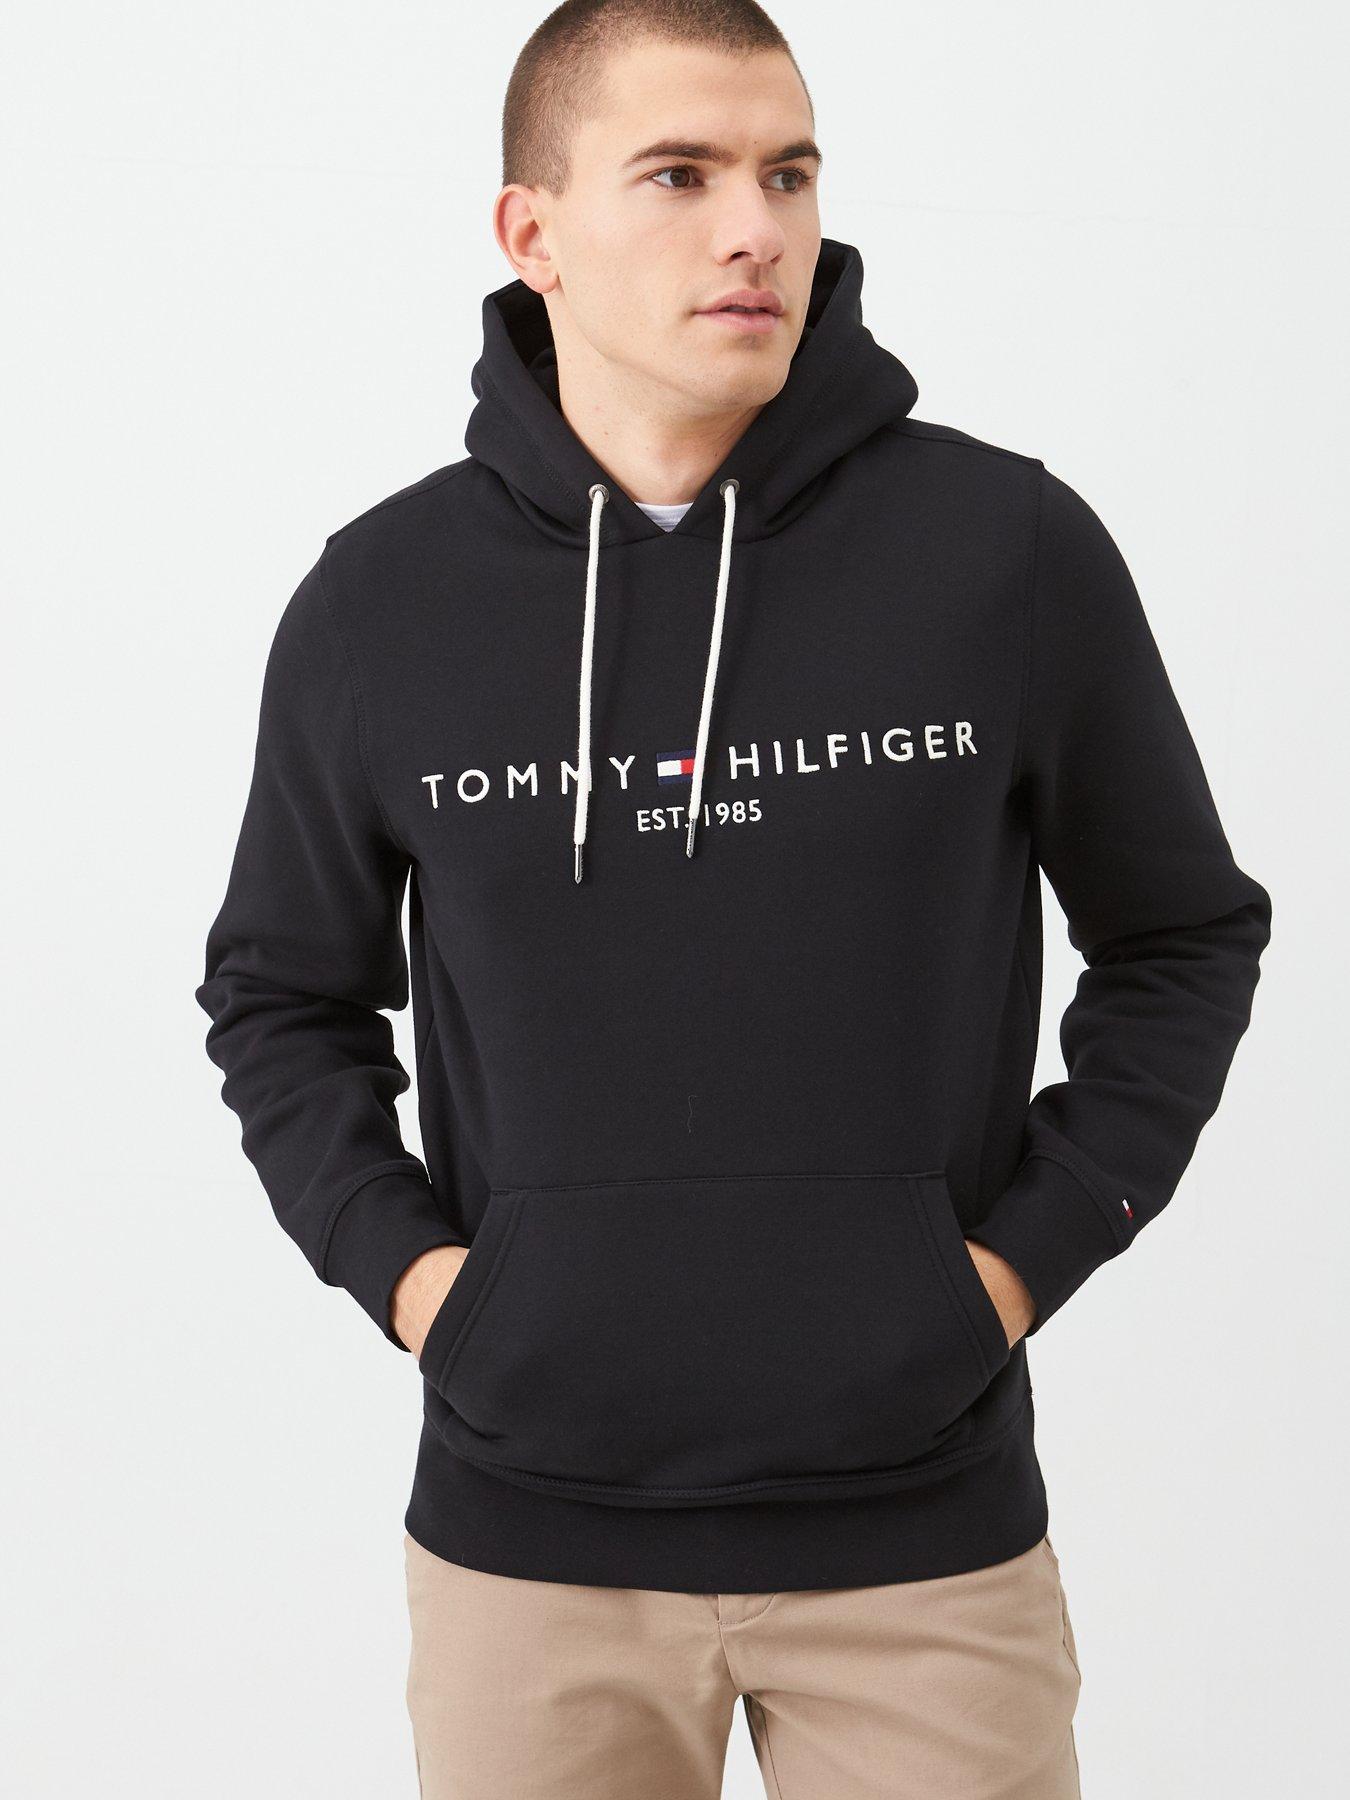 Tommy hilfiger | Hoodies & sweatshirts | Men